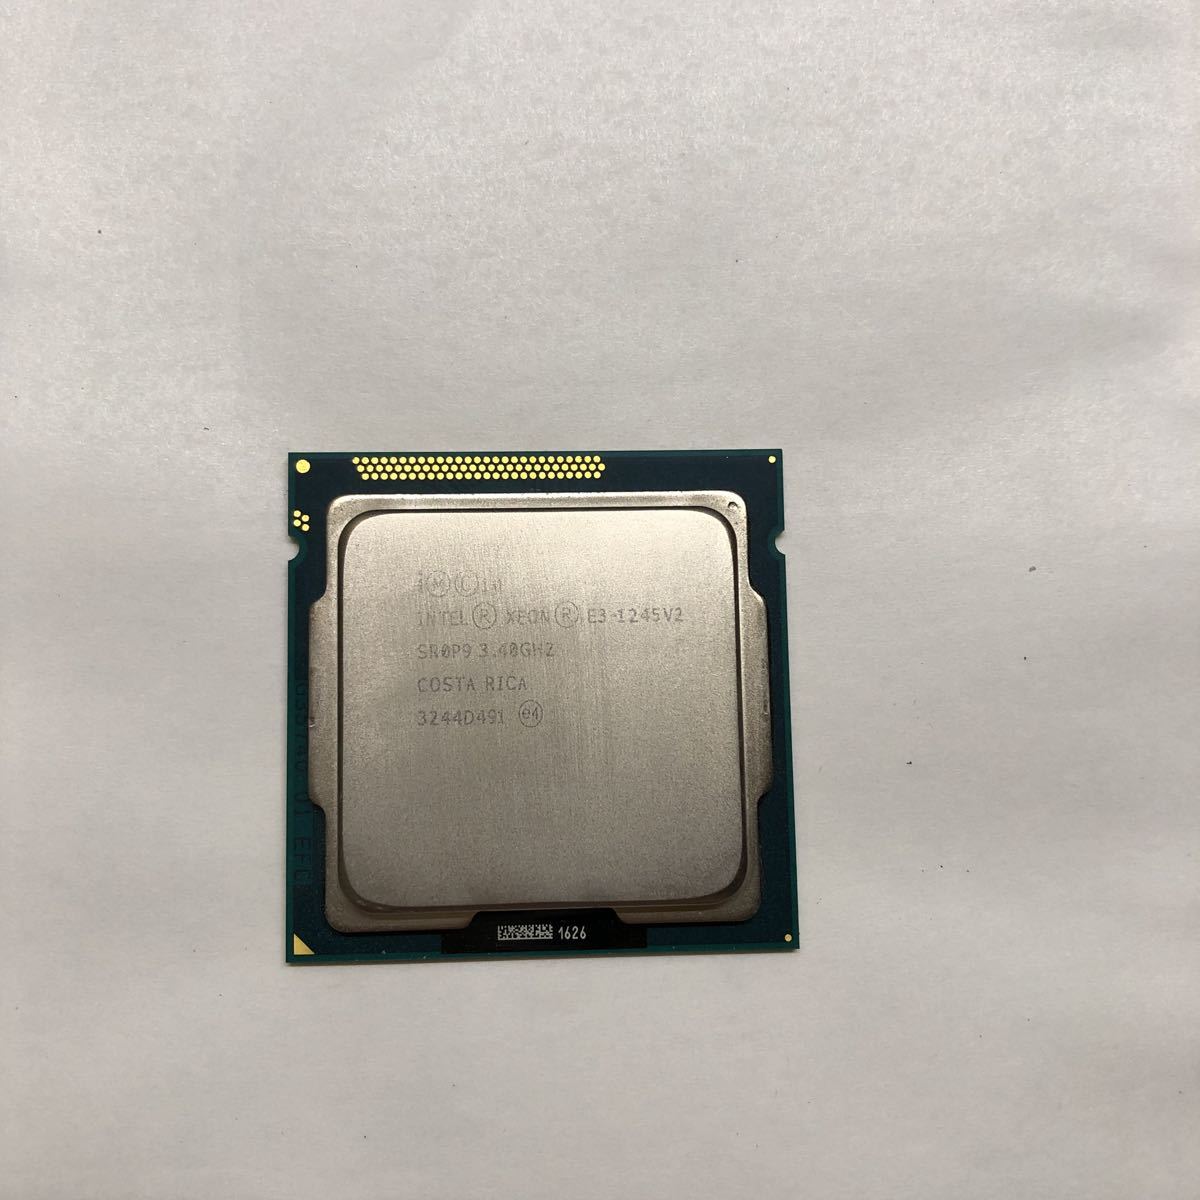 Intel Xeon E3-1245 v2 SR0P9 4C 3.4GHz /102_画像1